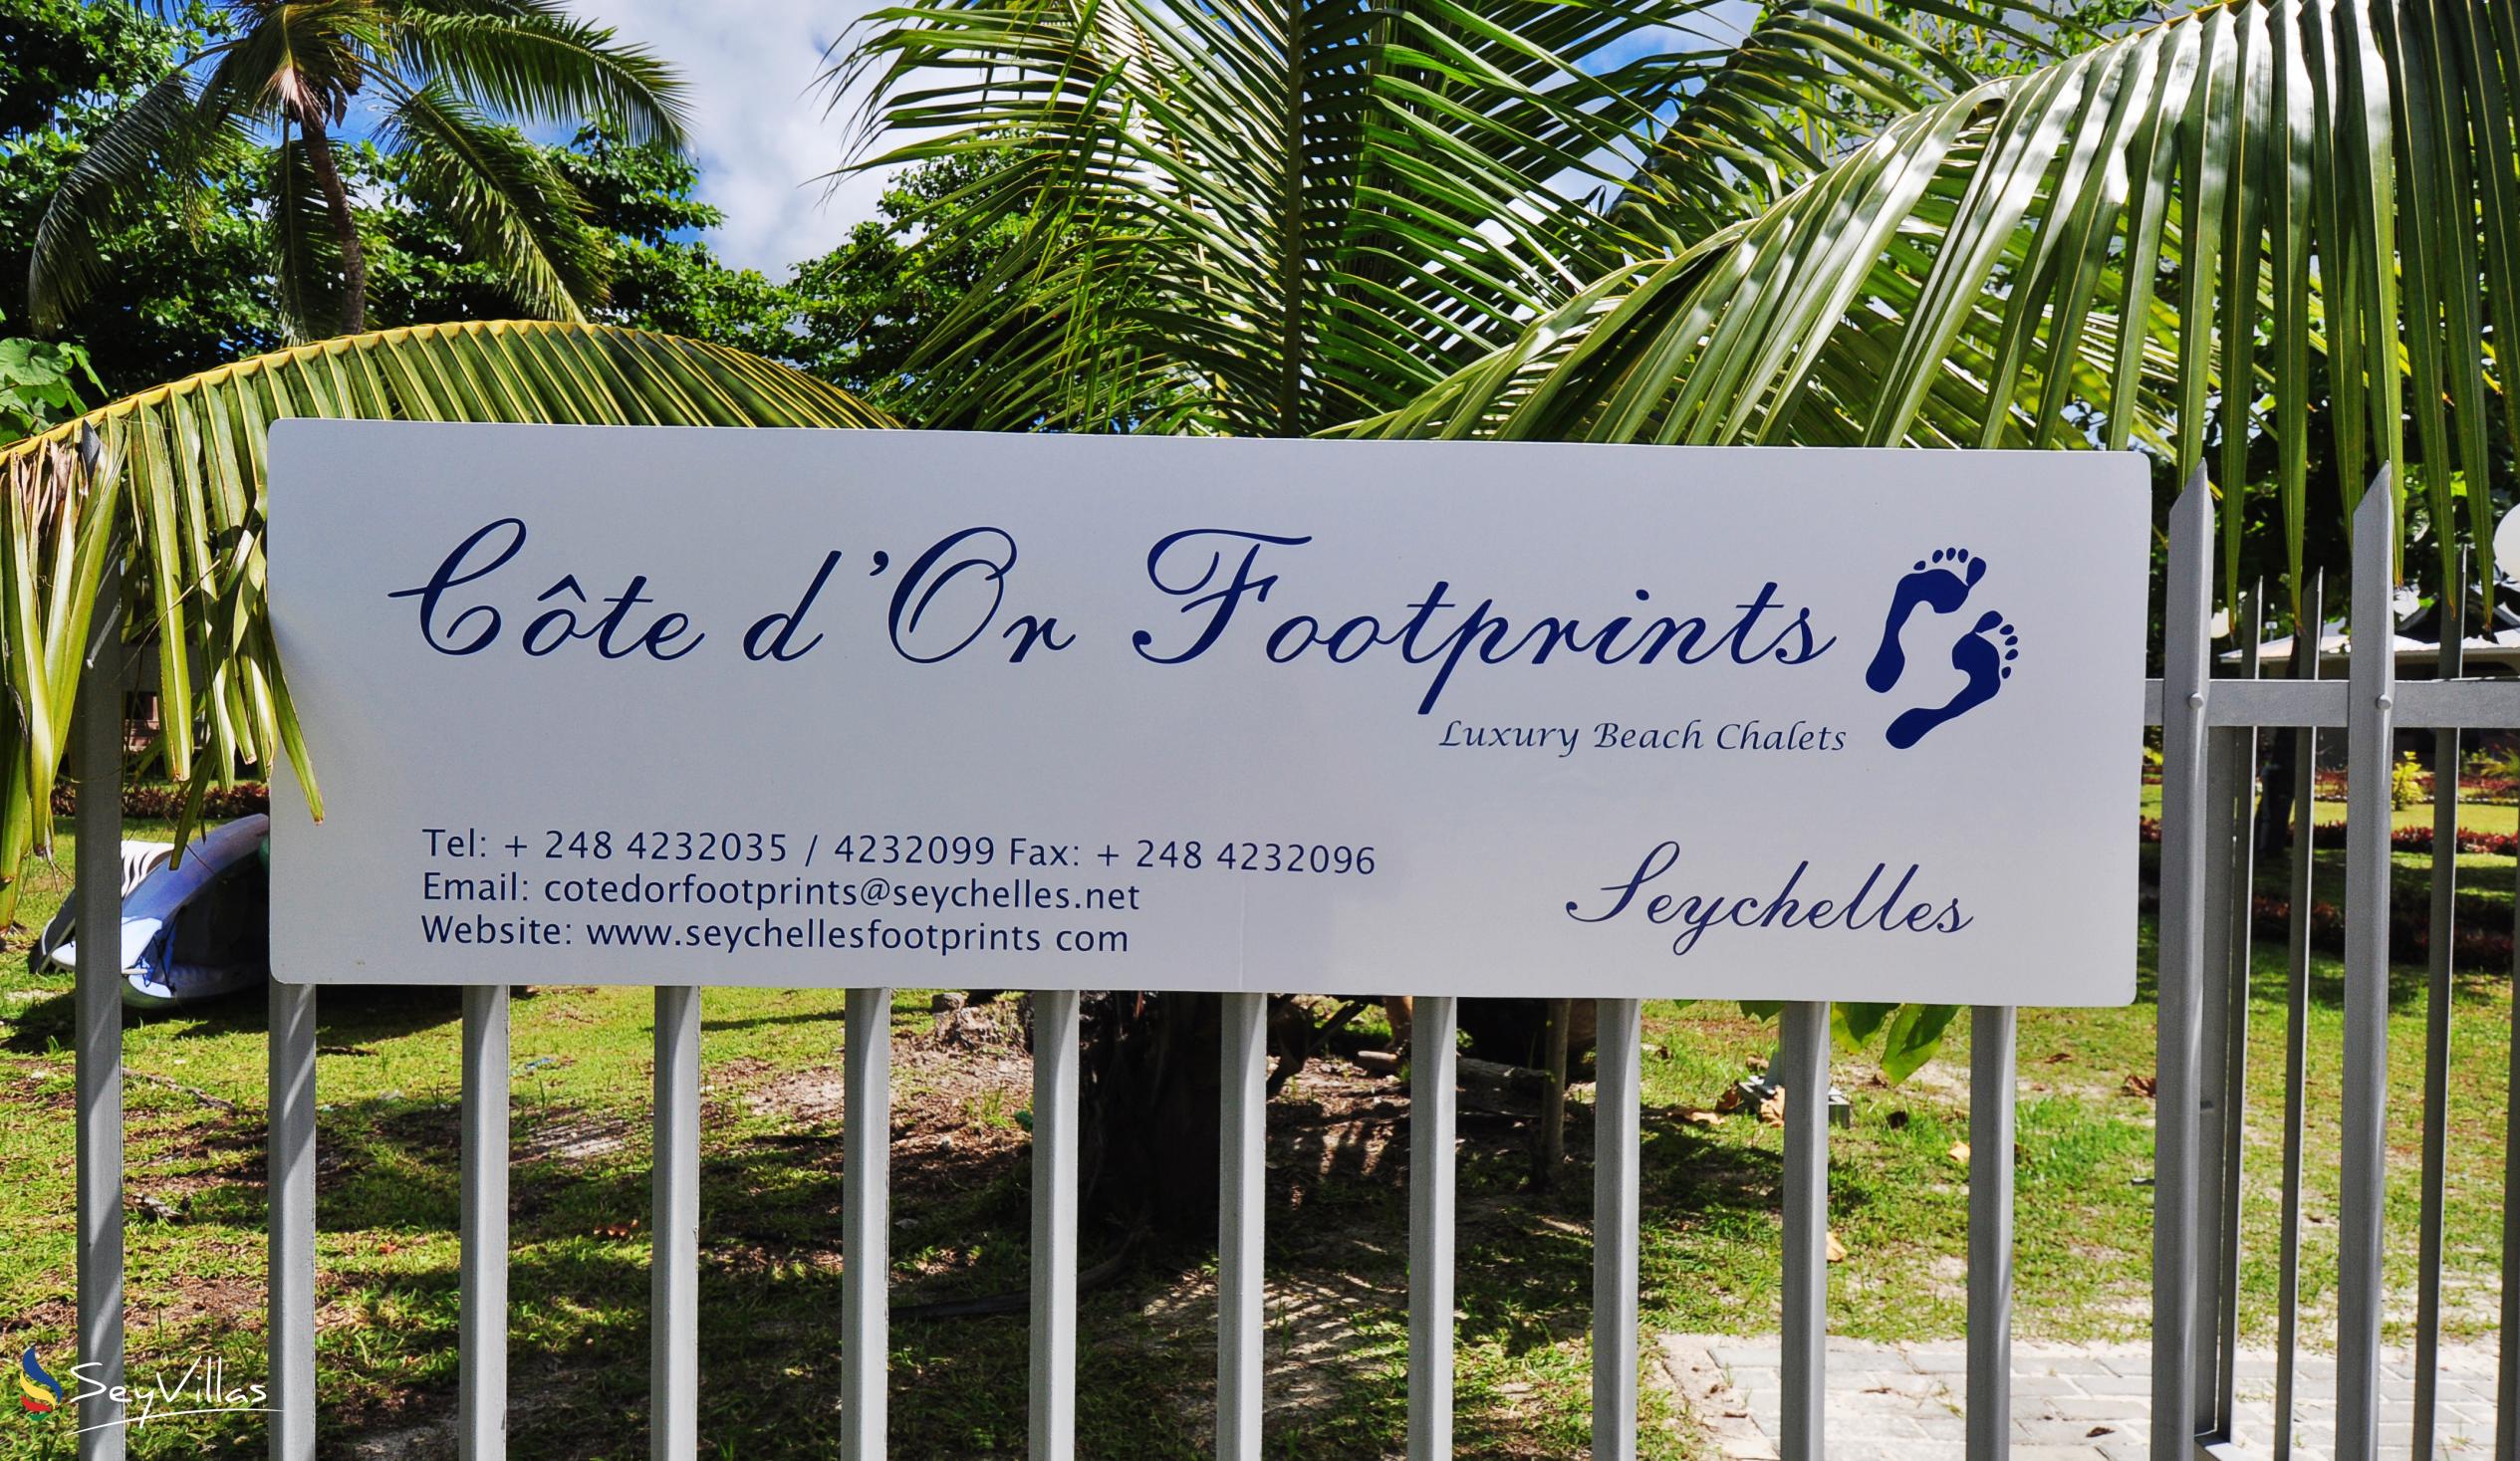 Photo 68: Cote d'Or Footprints - Outdoor area - Praslin (Seychelles)